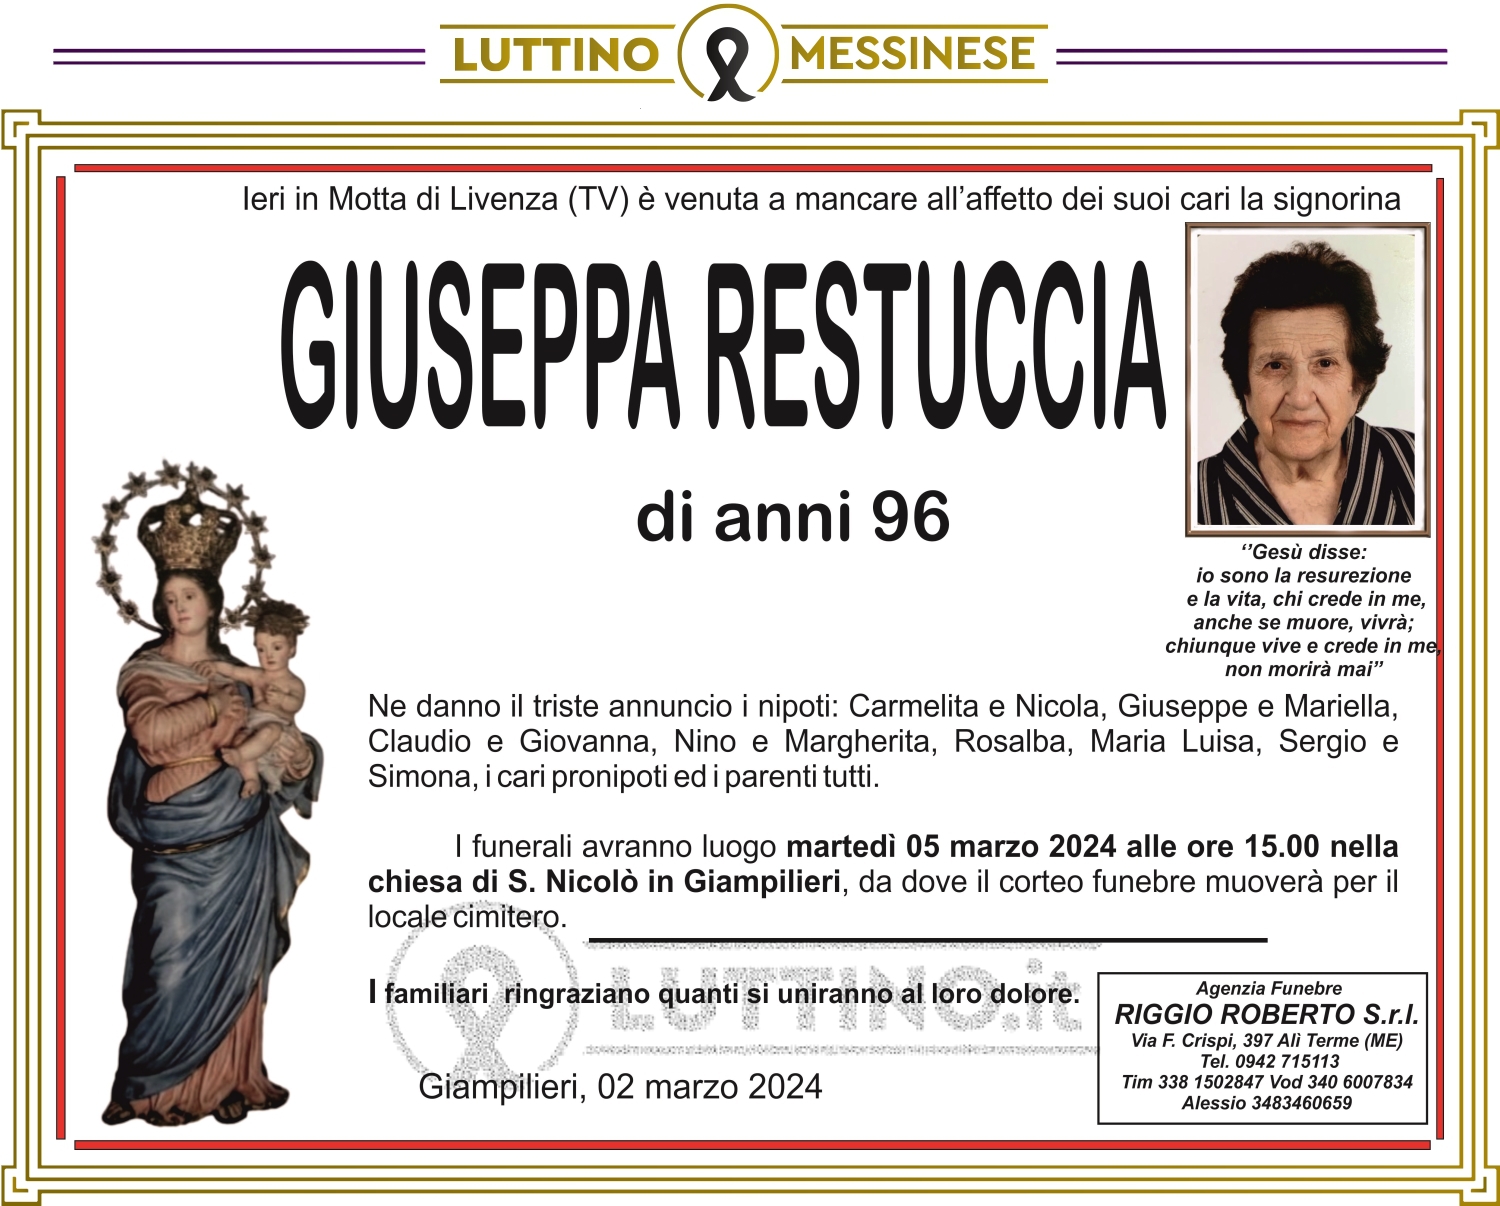 Giuseppa Restuccia